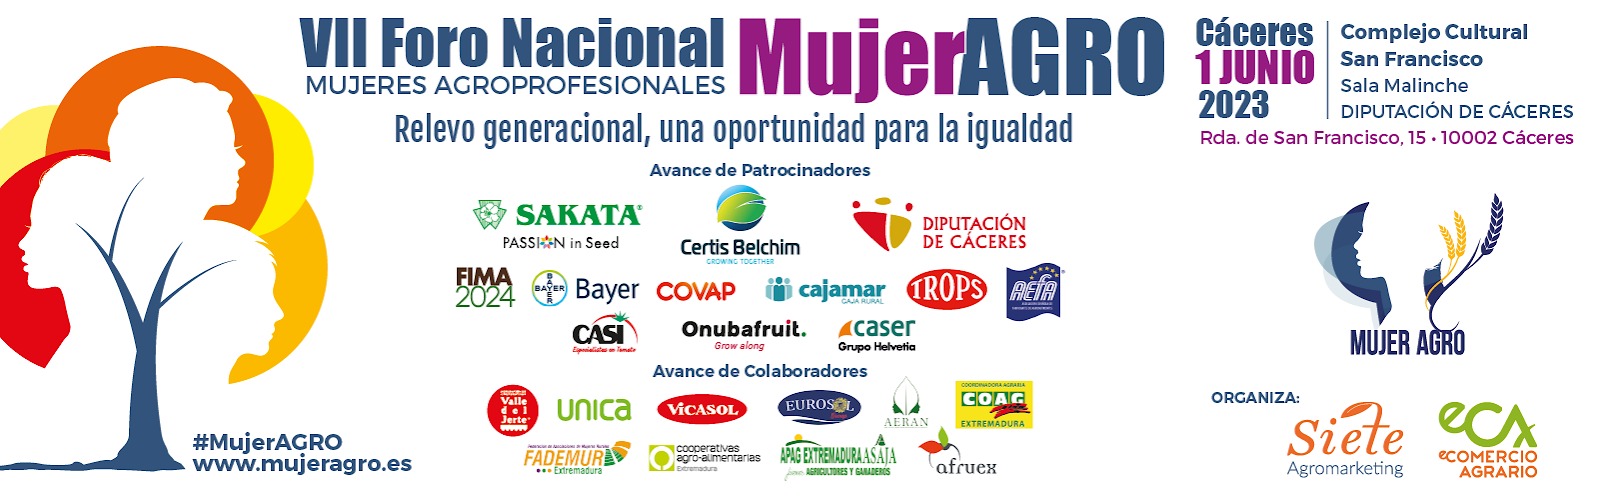 #mujerAGRO - Foro Nacional Business Agro: Mujeres Agroprofesionales